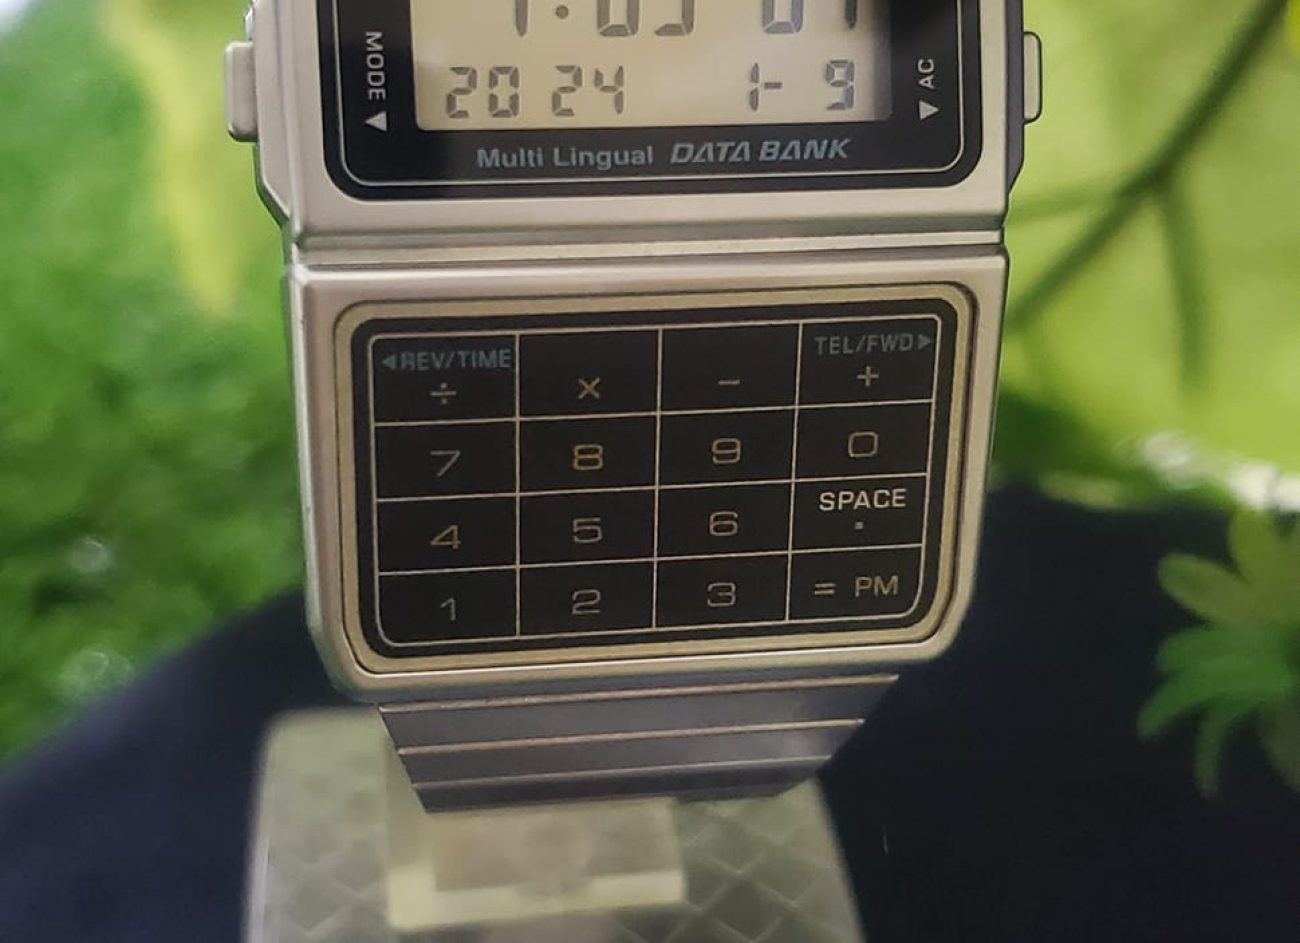 Casio Men's Silver Tone 25 Memory Calculator Databank Watch in Basic Office Calculators by Casio